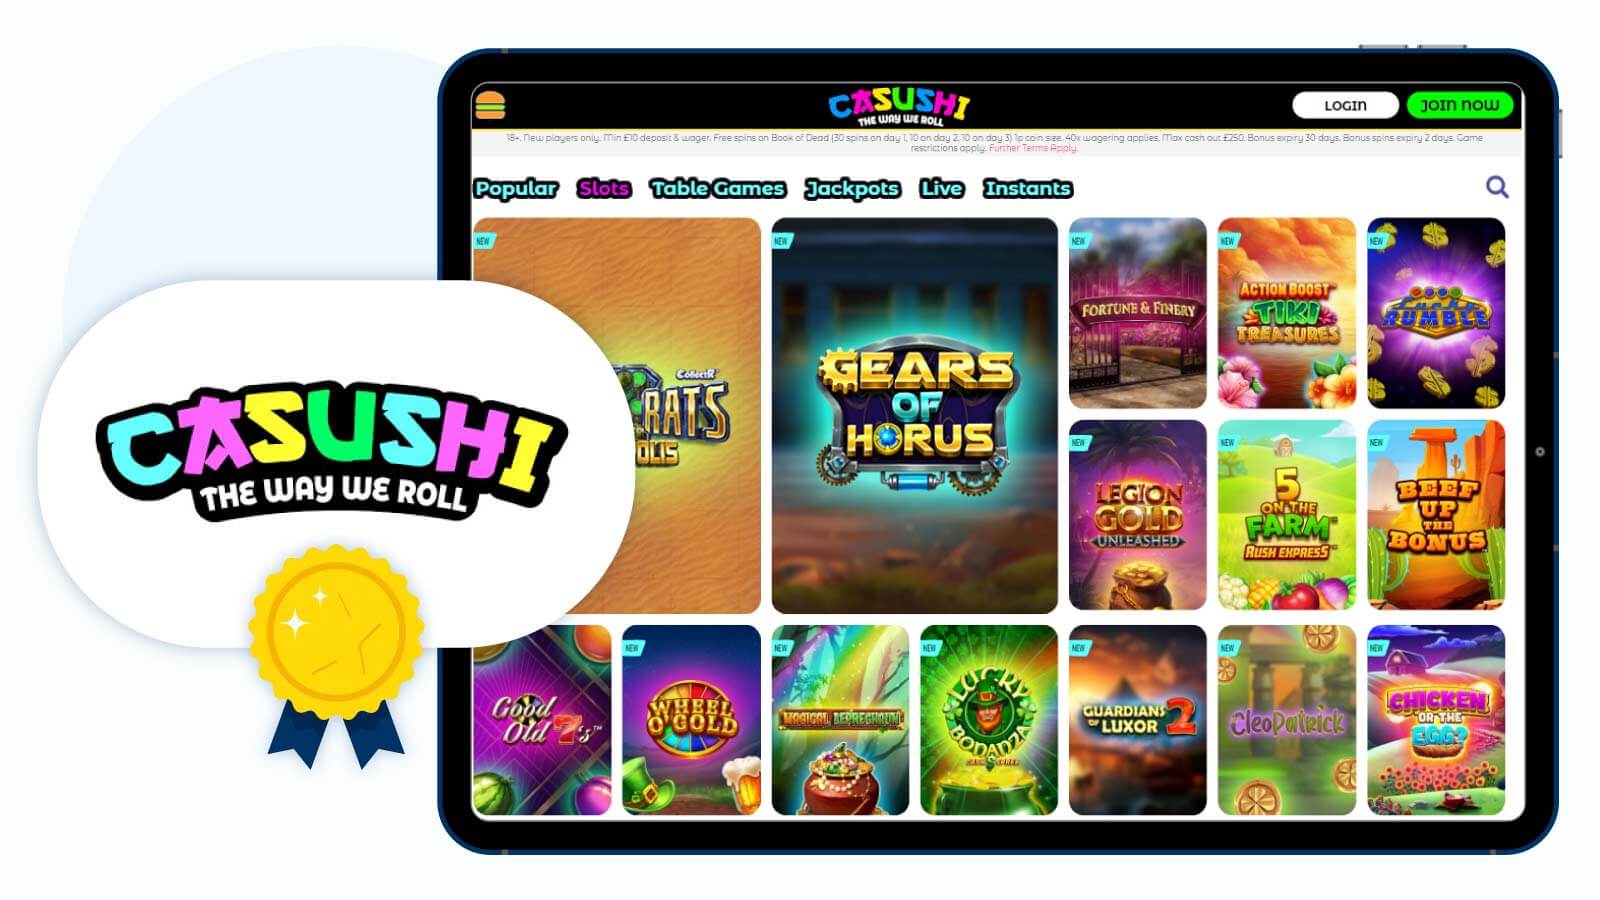 Casushi-Casino-Best-Neteller-Casino-UK